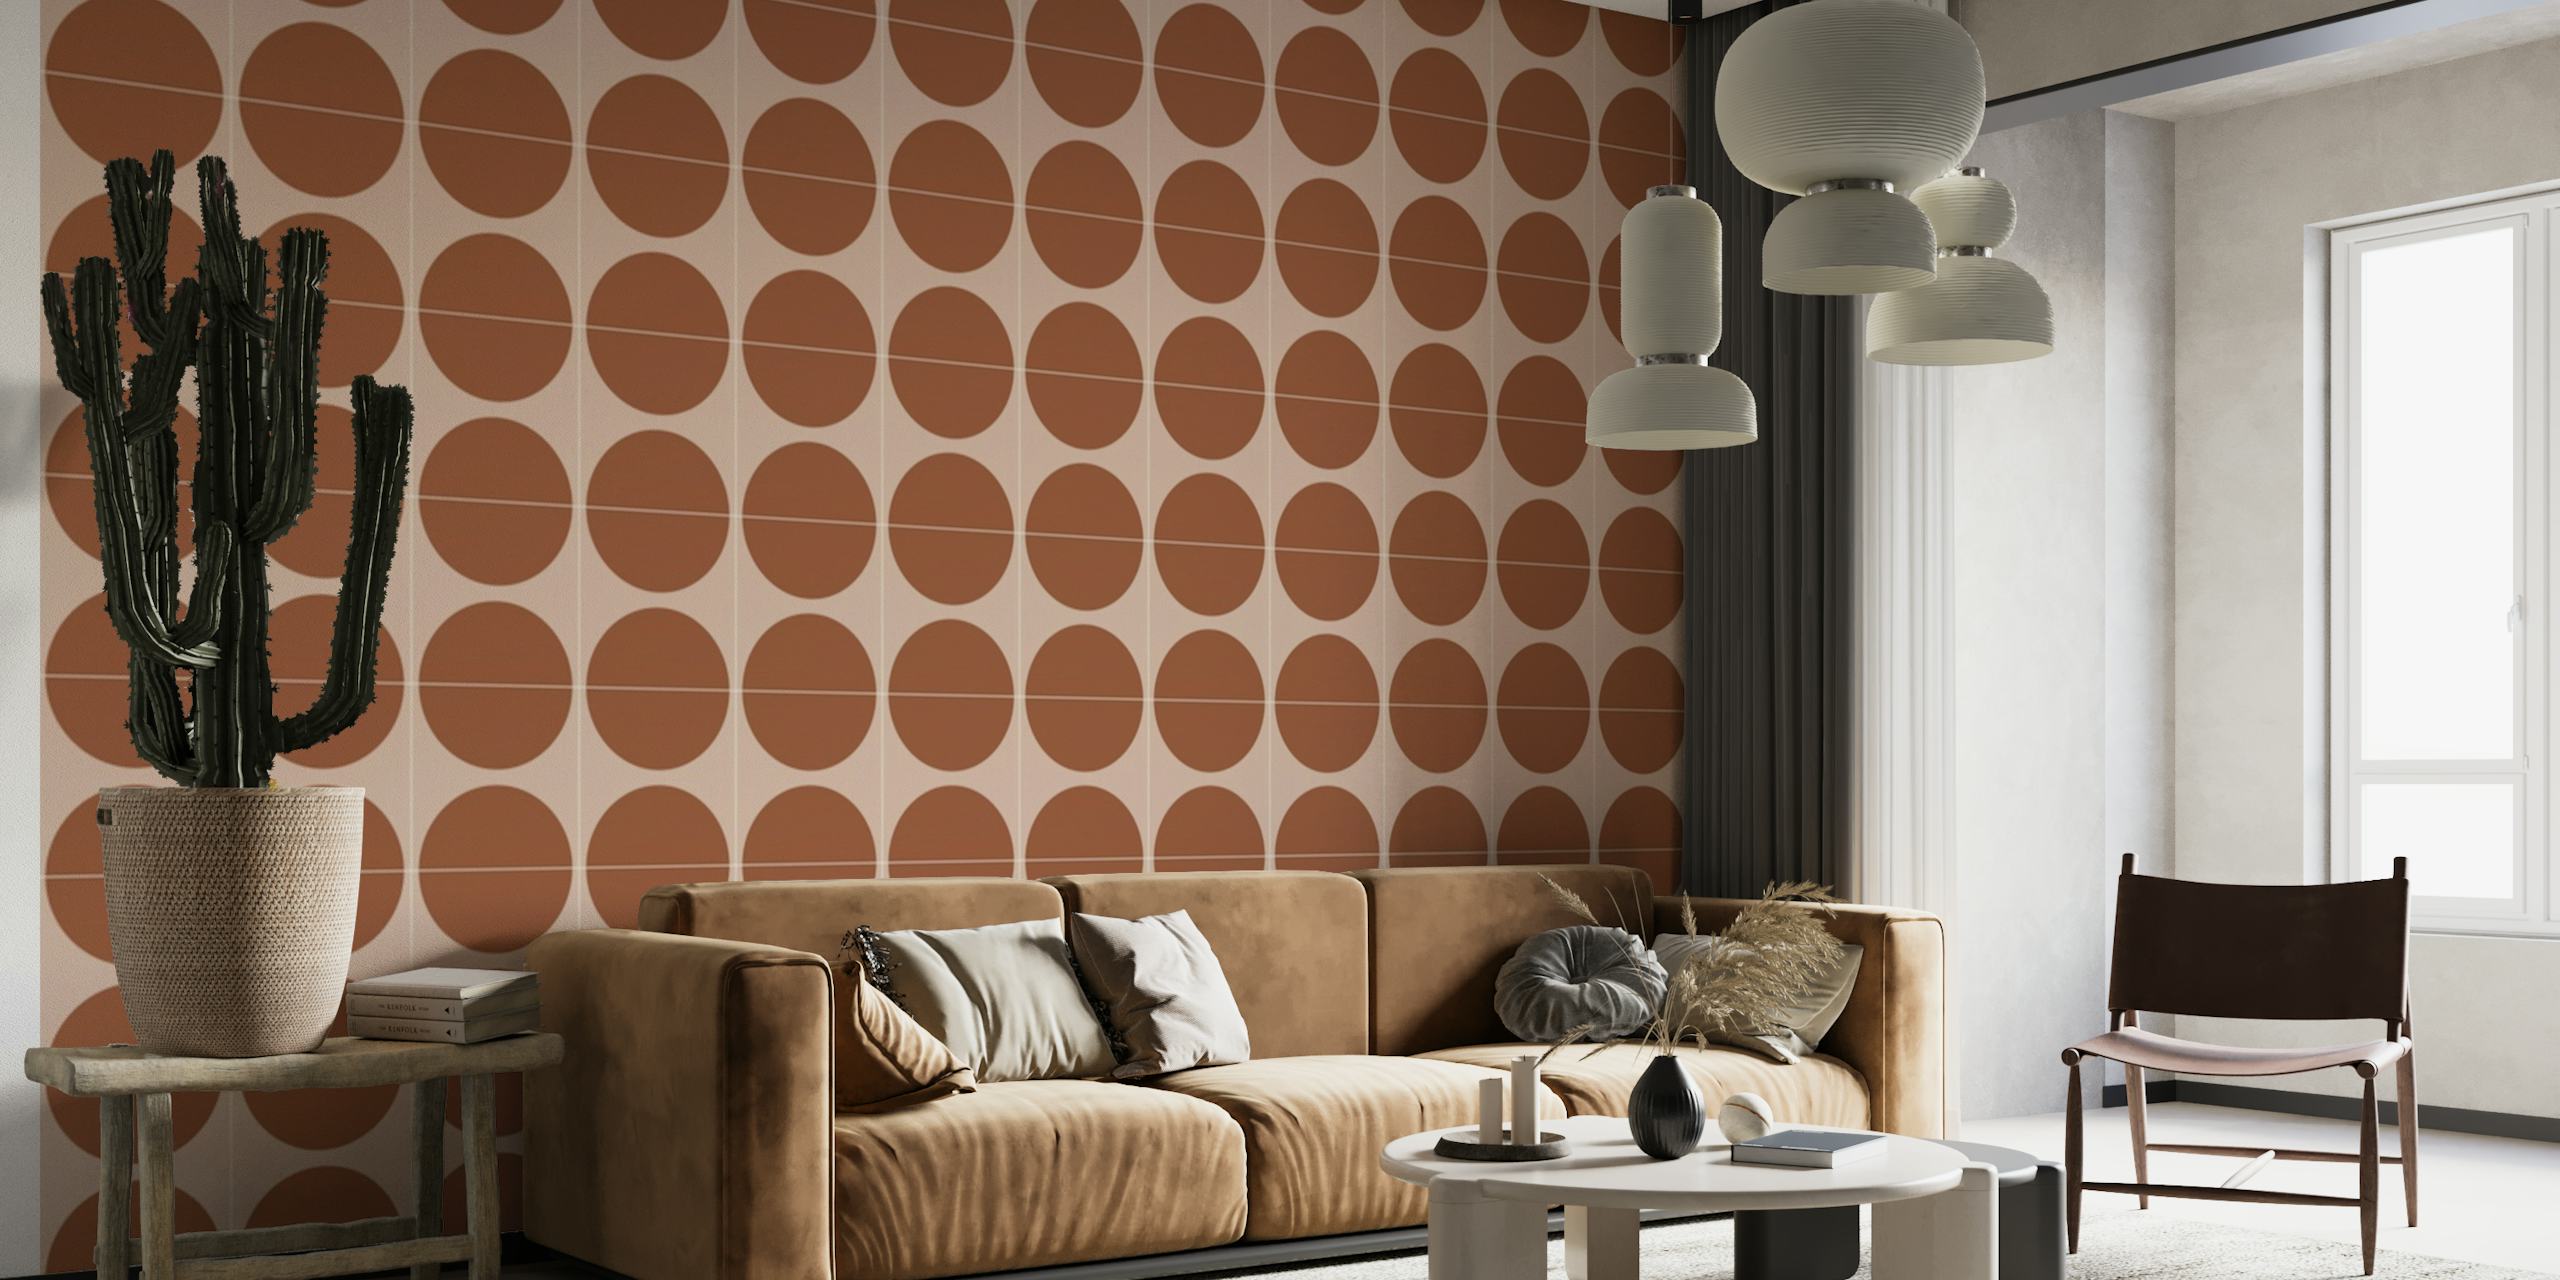 Painted Cotto Tiles Cinnamon wallpaper